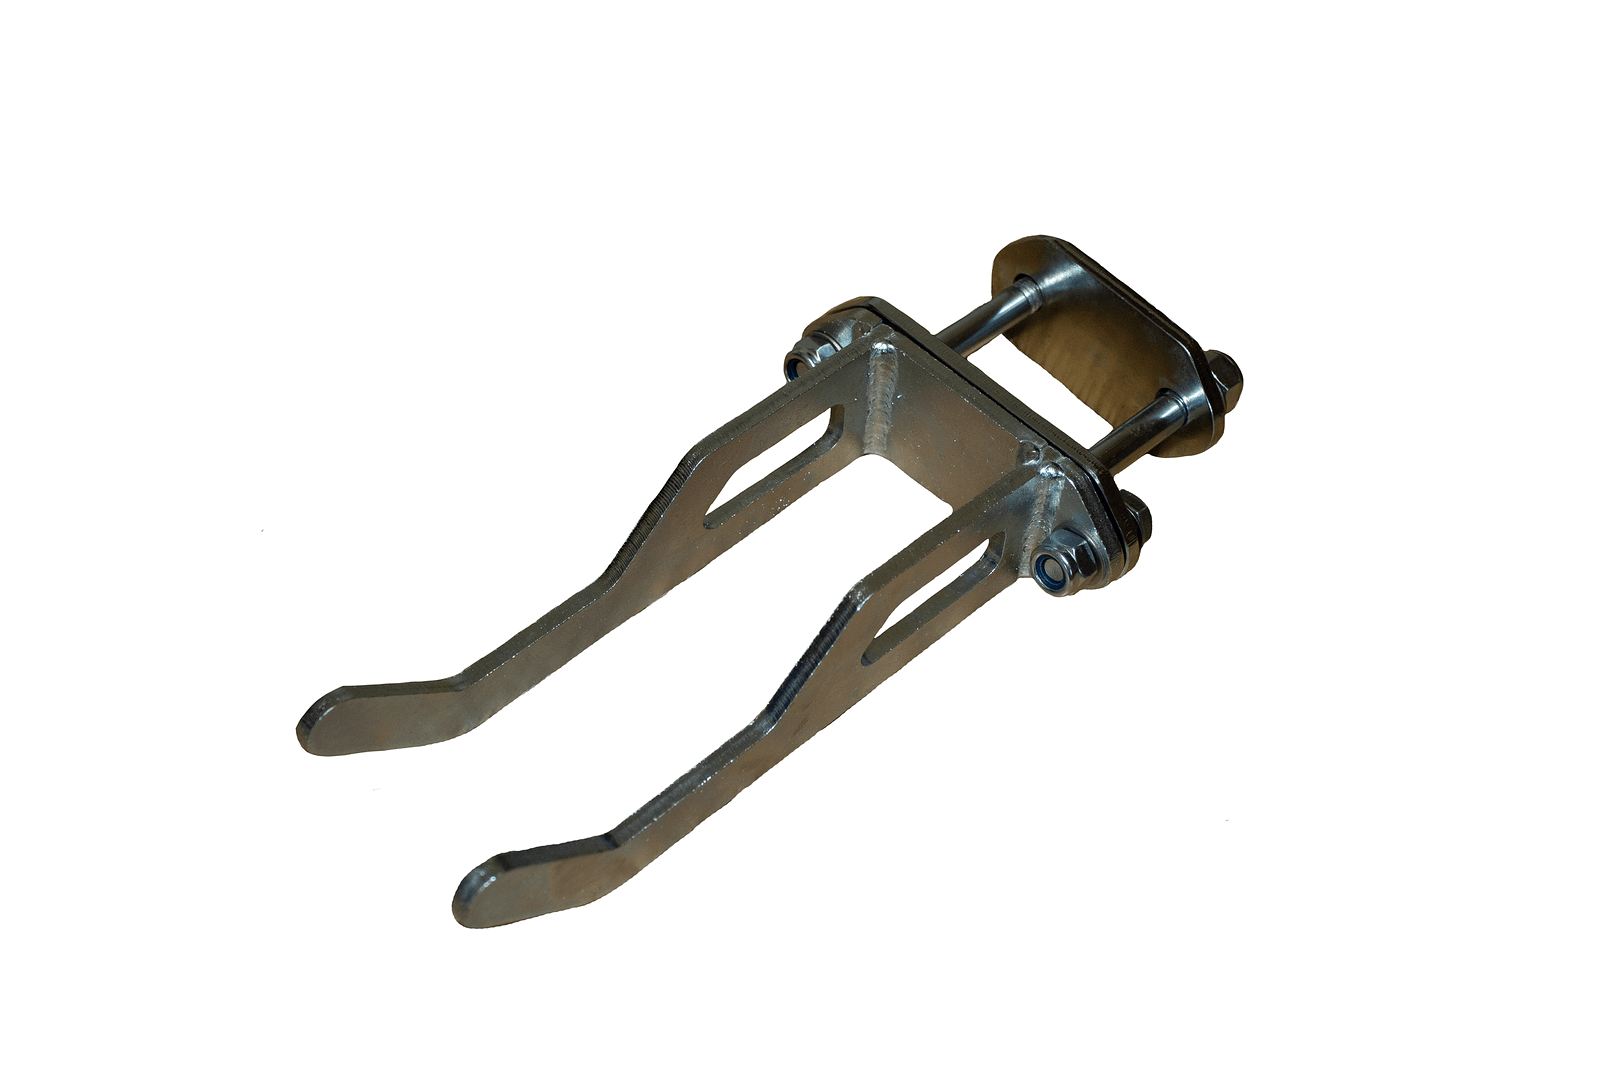 metal clamp for a tripod leg